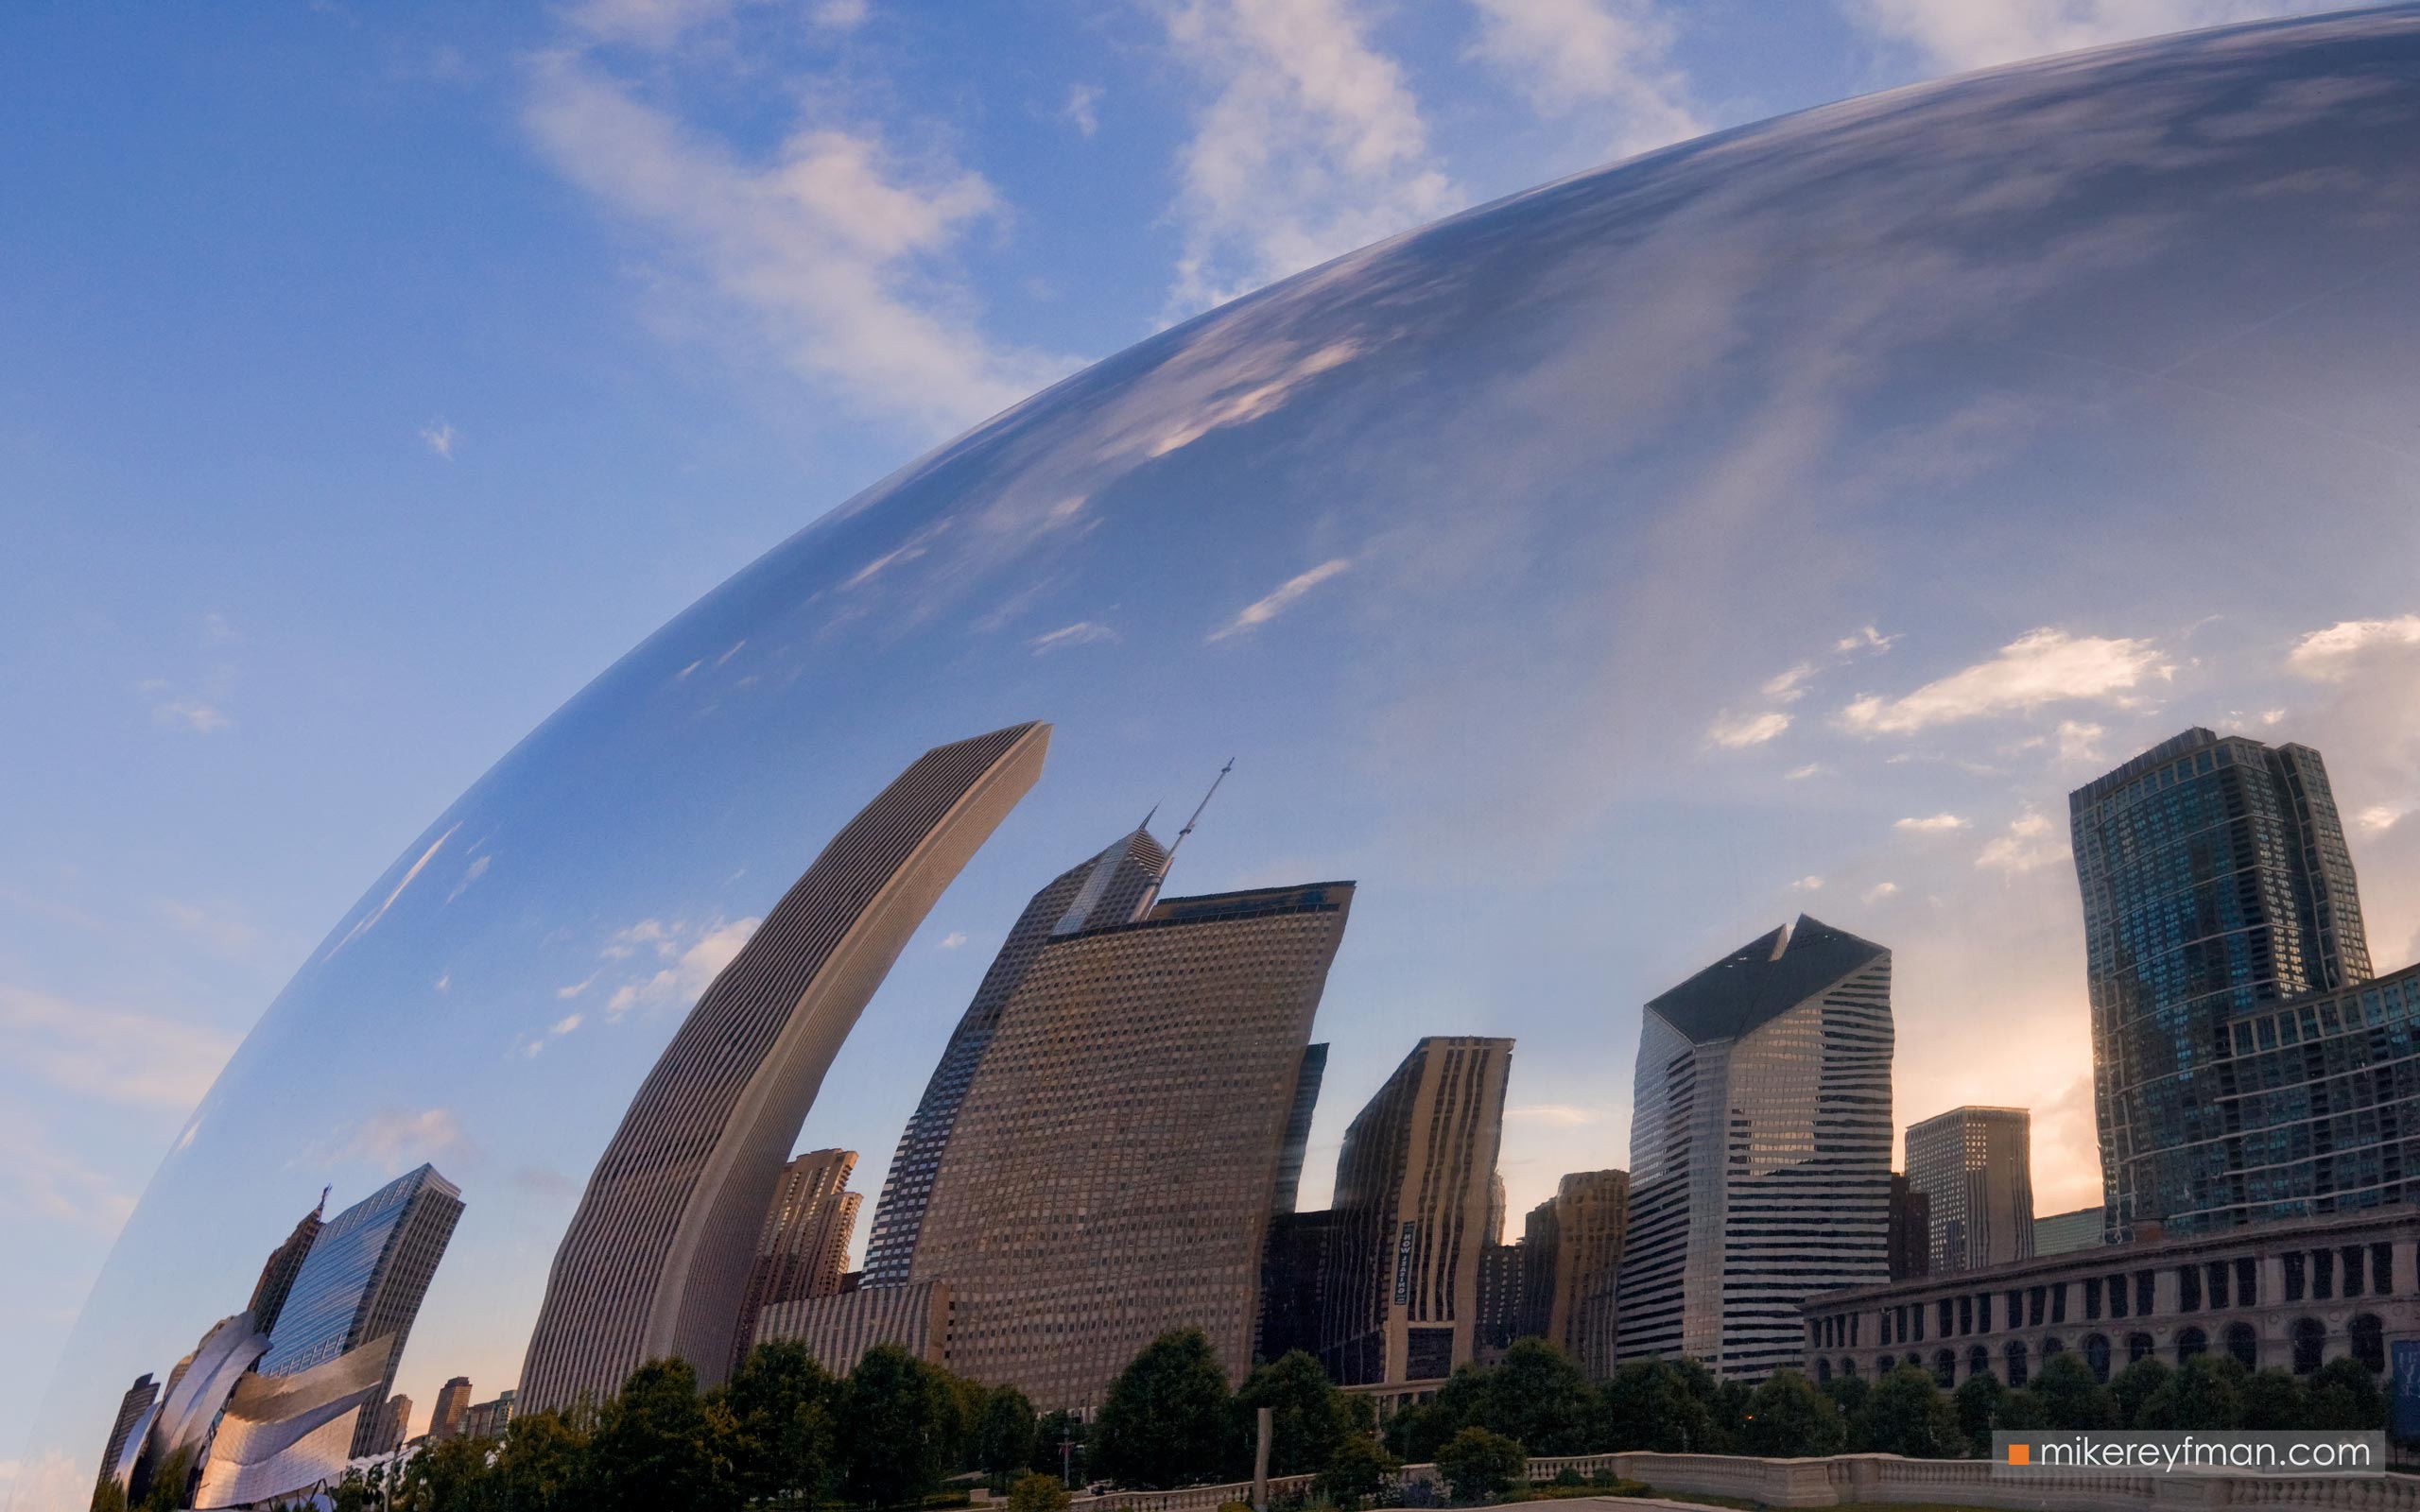 Cloud Gate - “The Bean”. Millennium Park, Chicago, Illinois, USA 053-CH1-MER7878 - Chicago, USA: The 